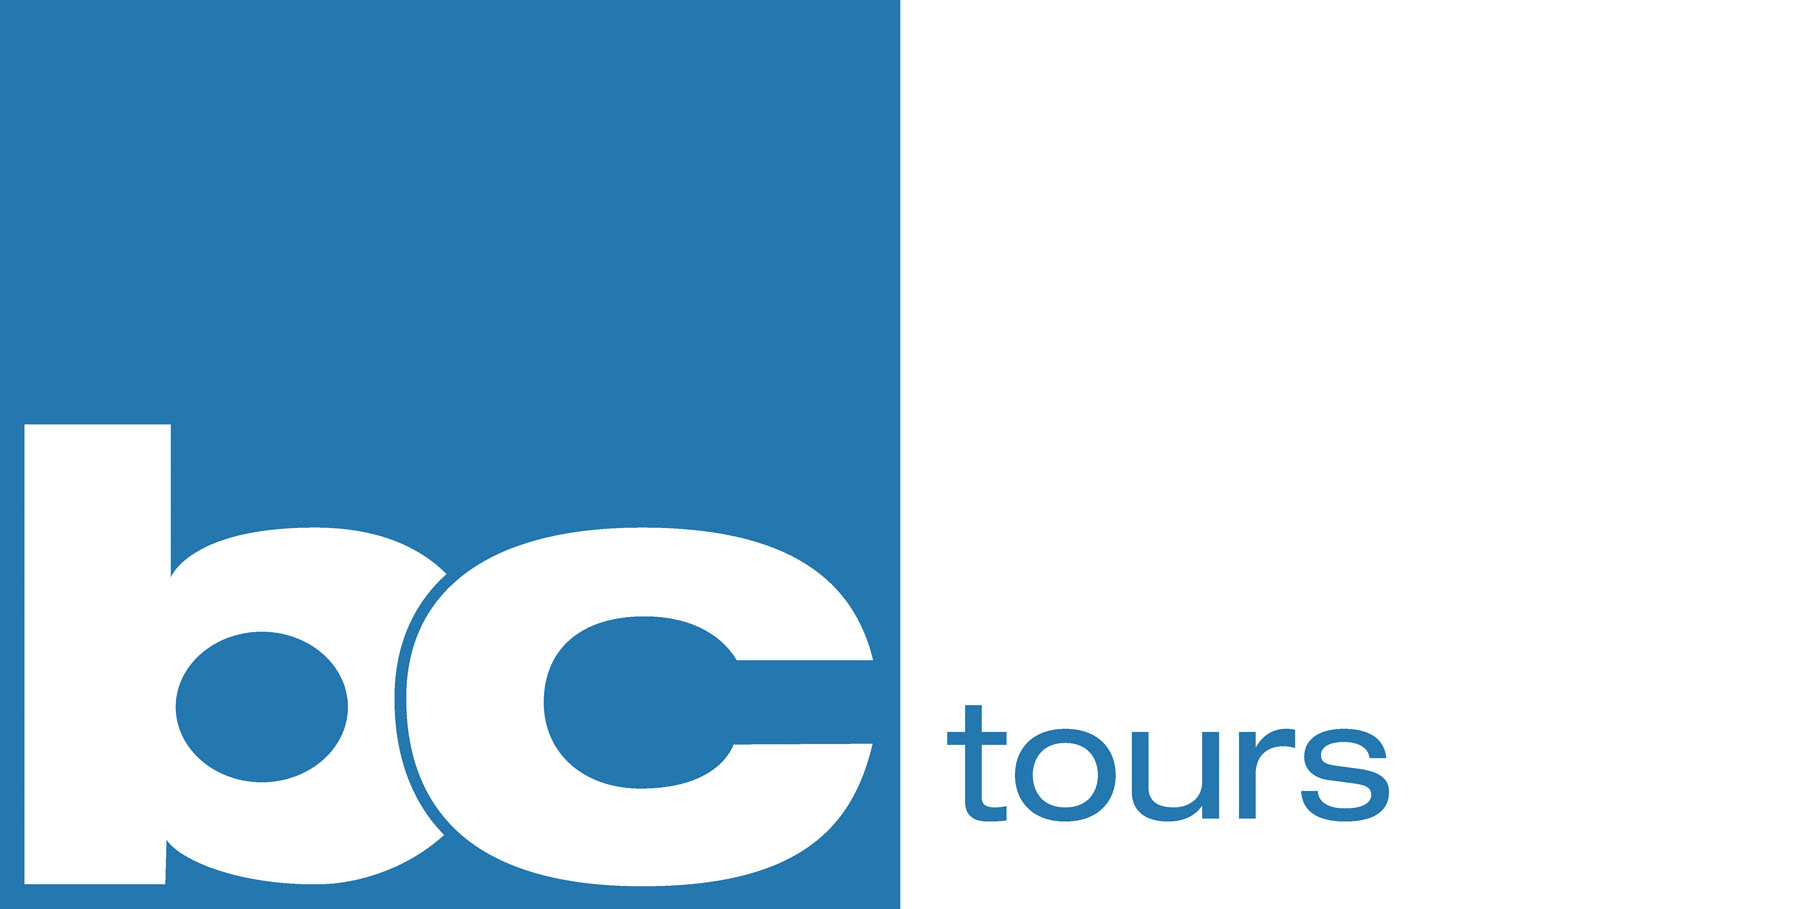 bc tours & travel inc